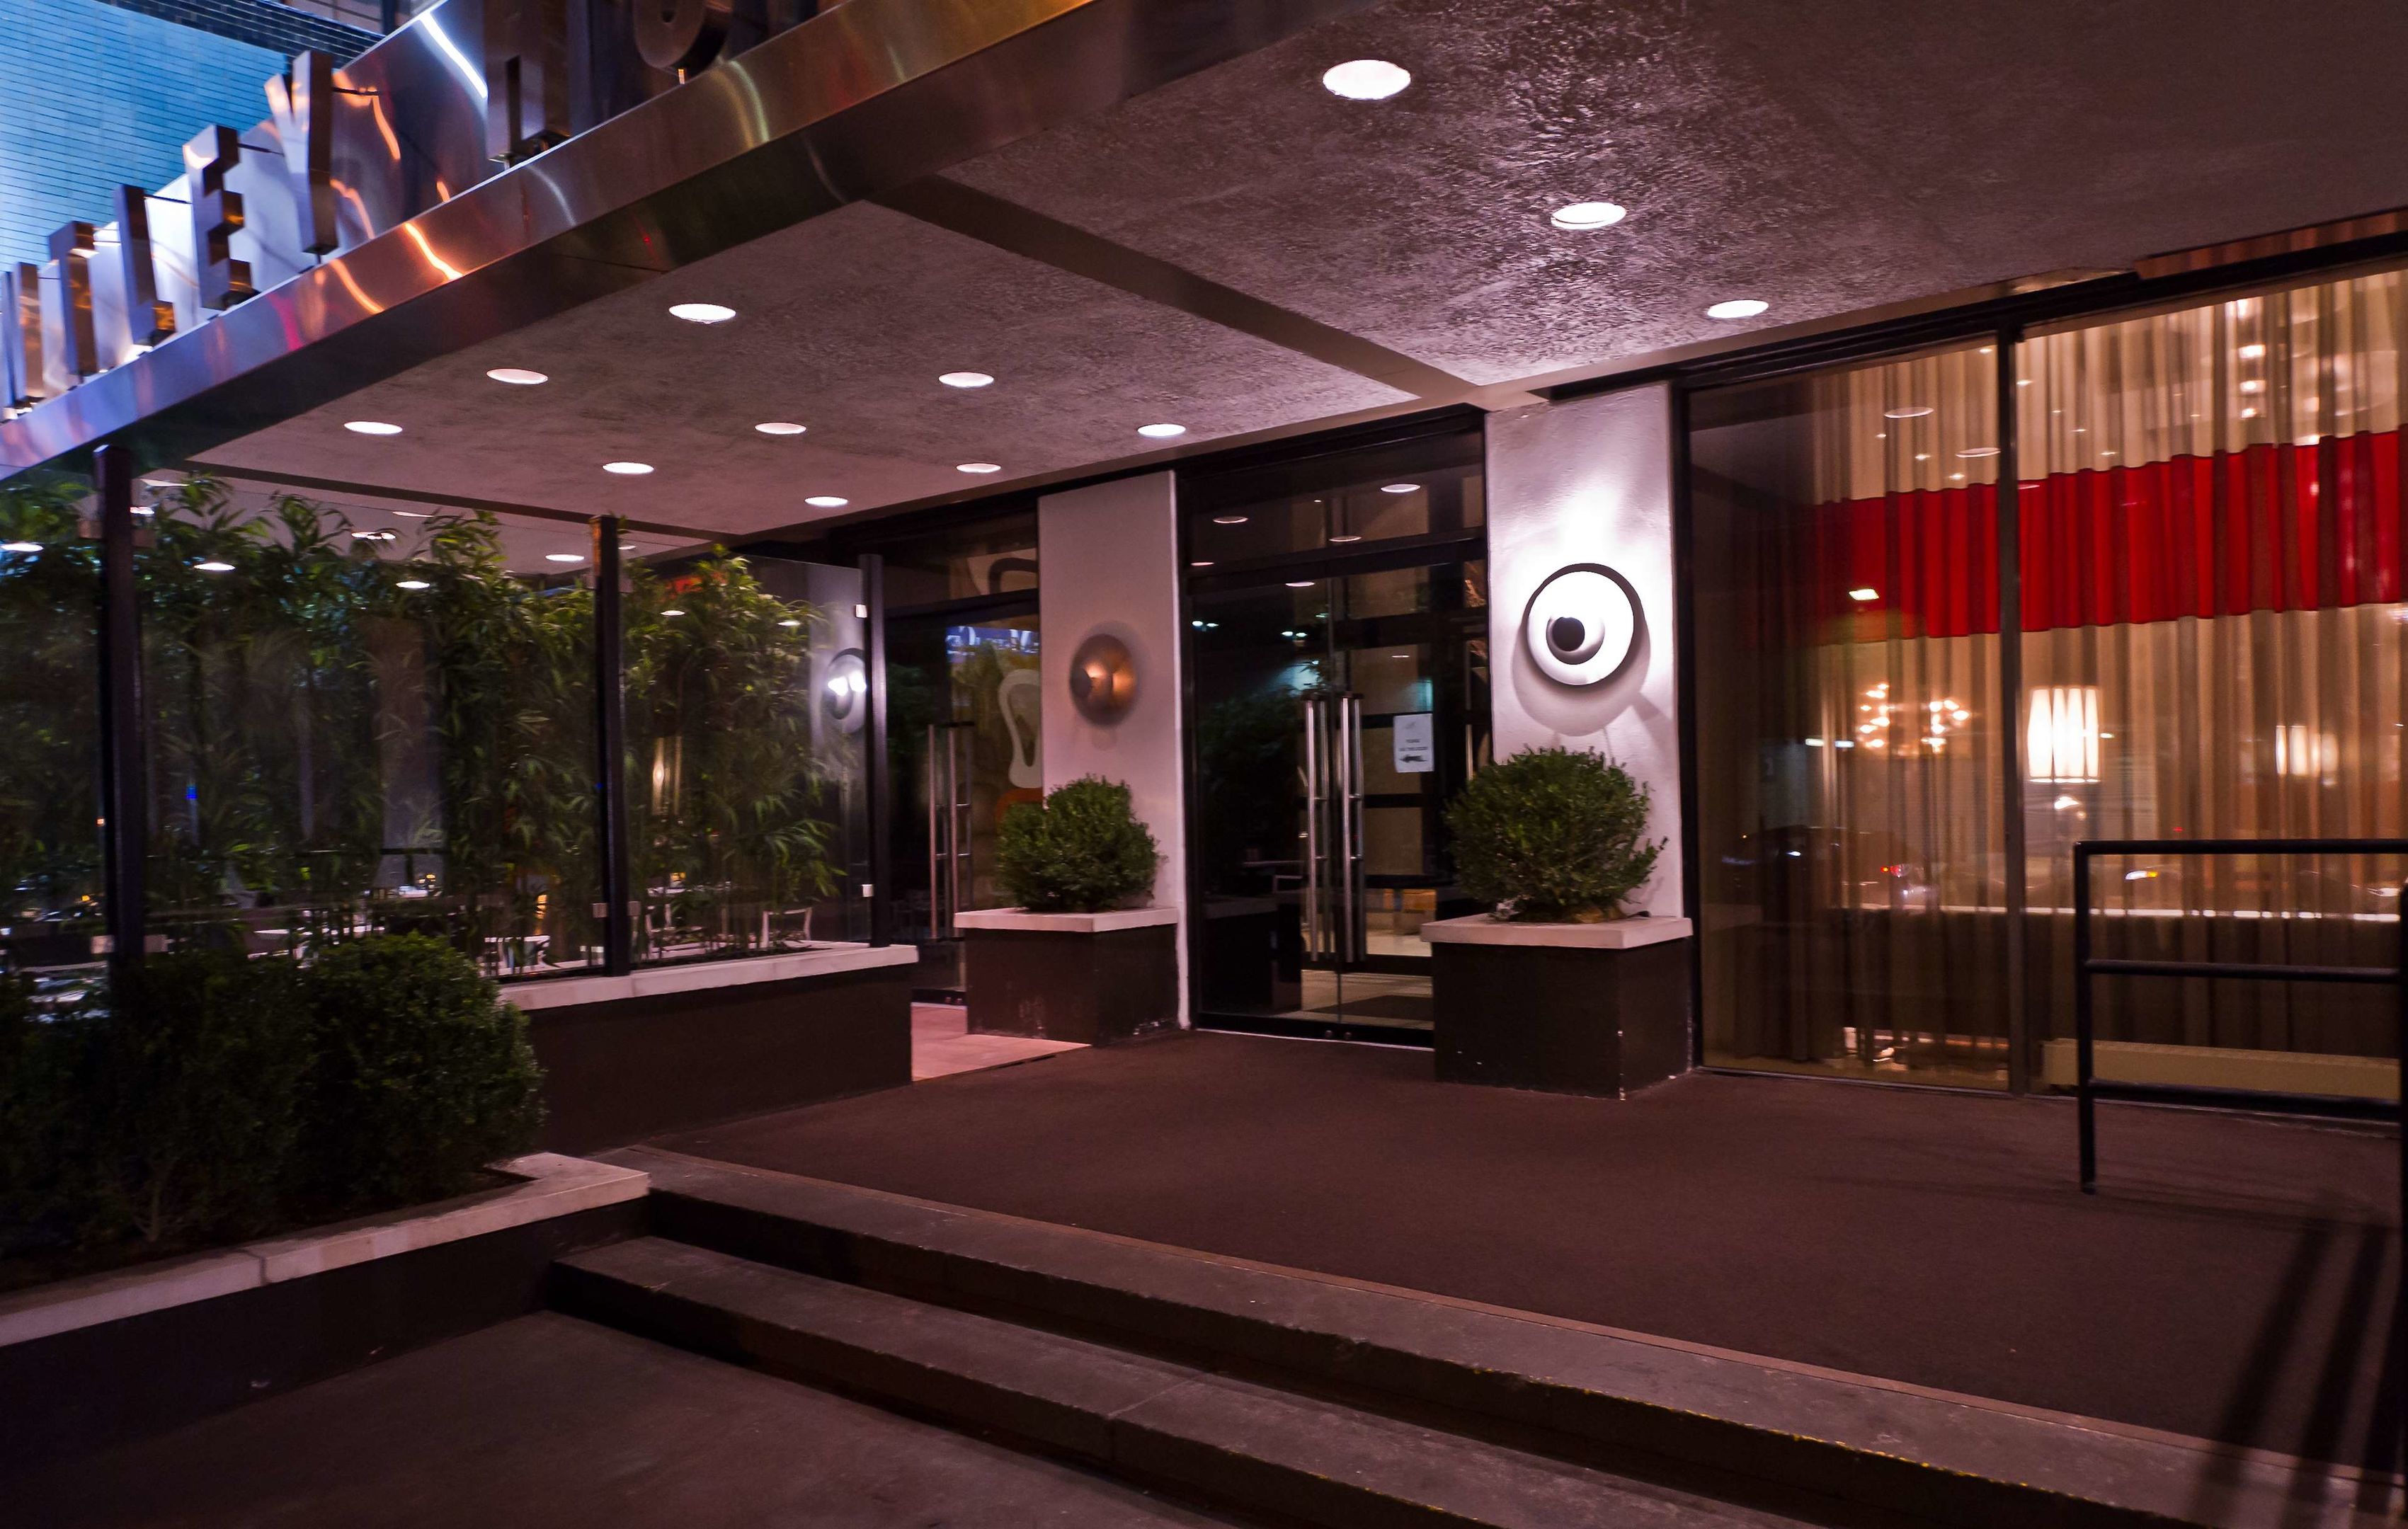 The Bentley Hotel New York